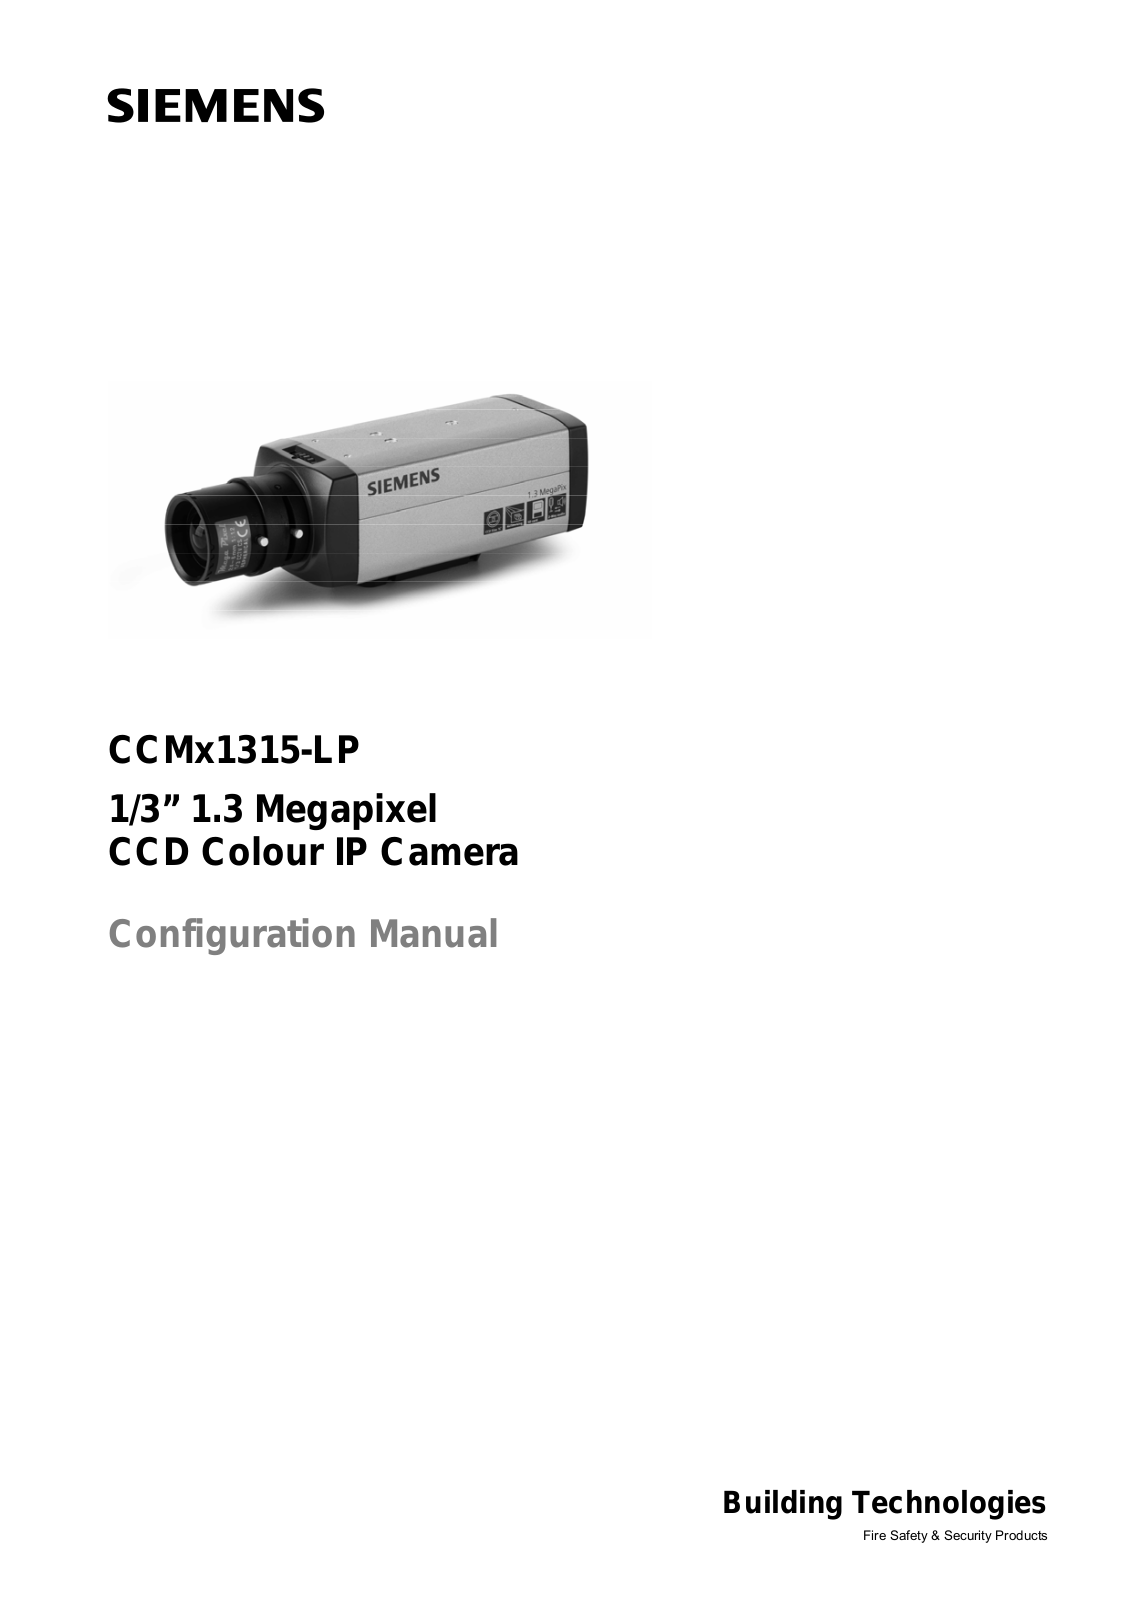 Siemens CCMX1315-LP User Manual